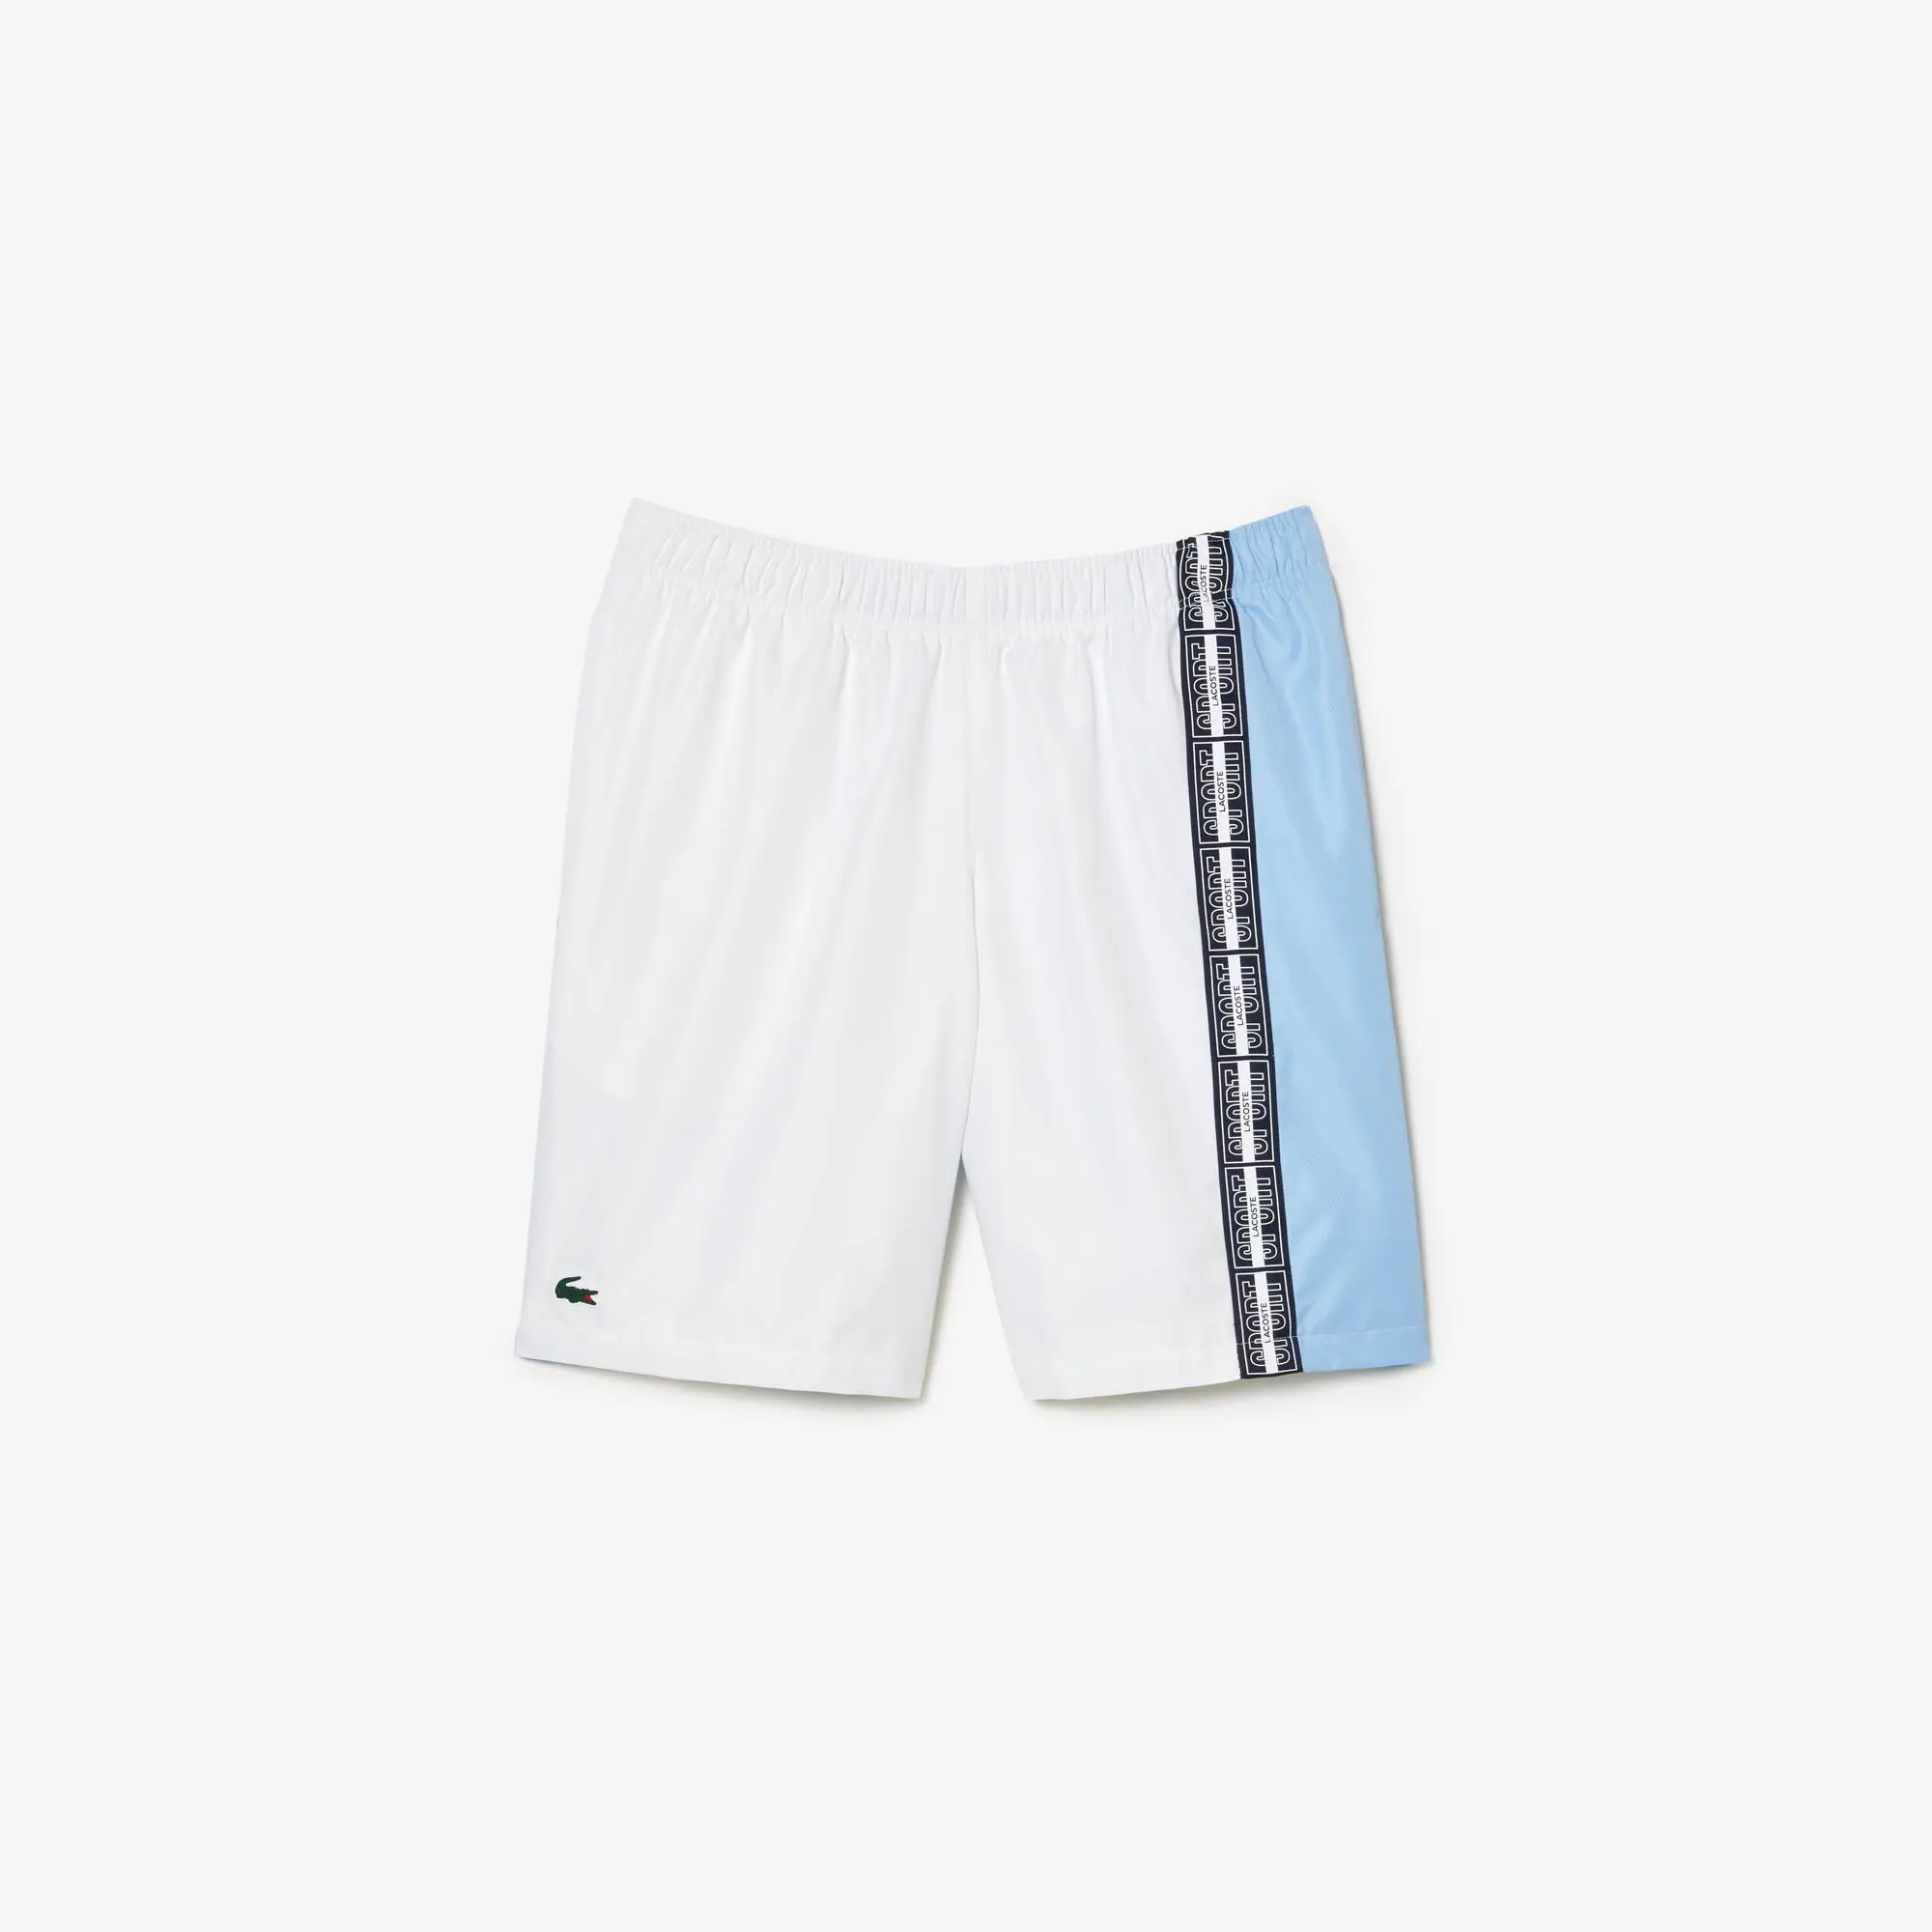 Lacoste Tennis-Shorts aus recyceltem Gewebe. 2